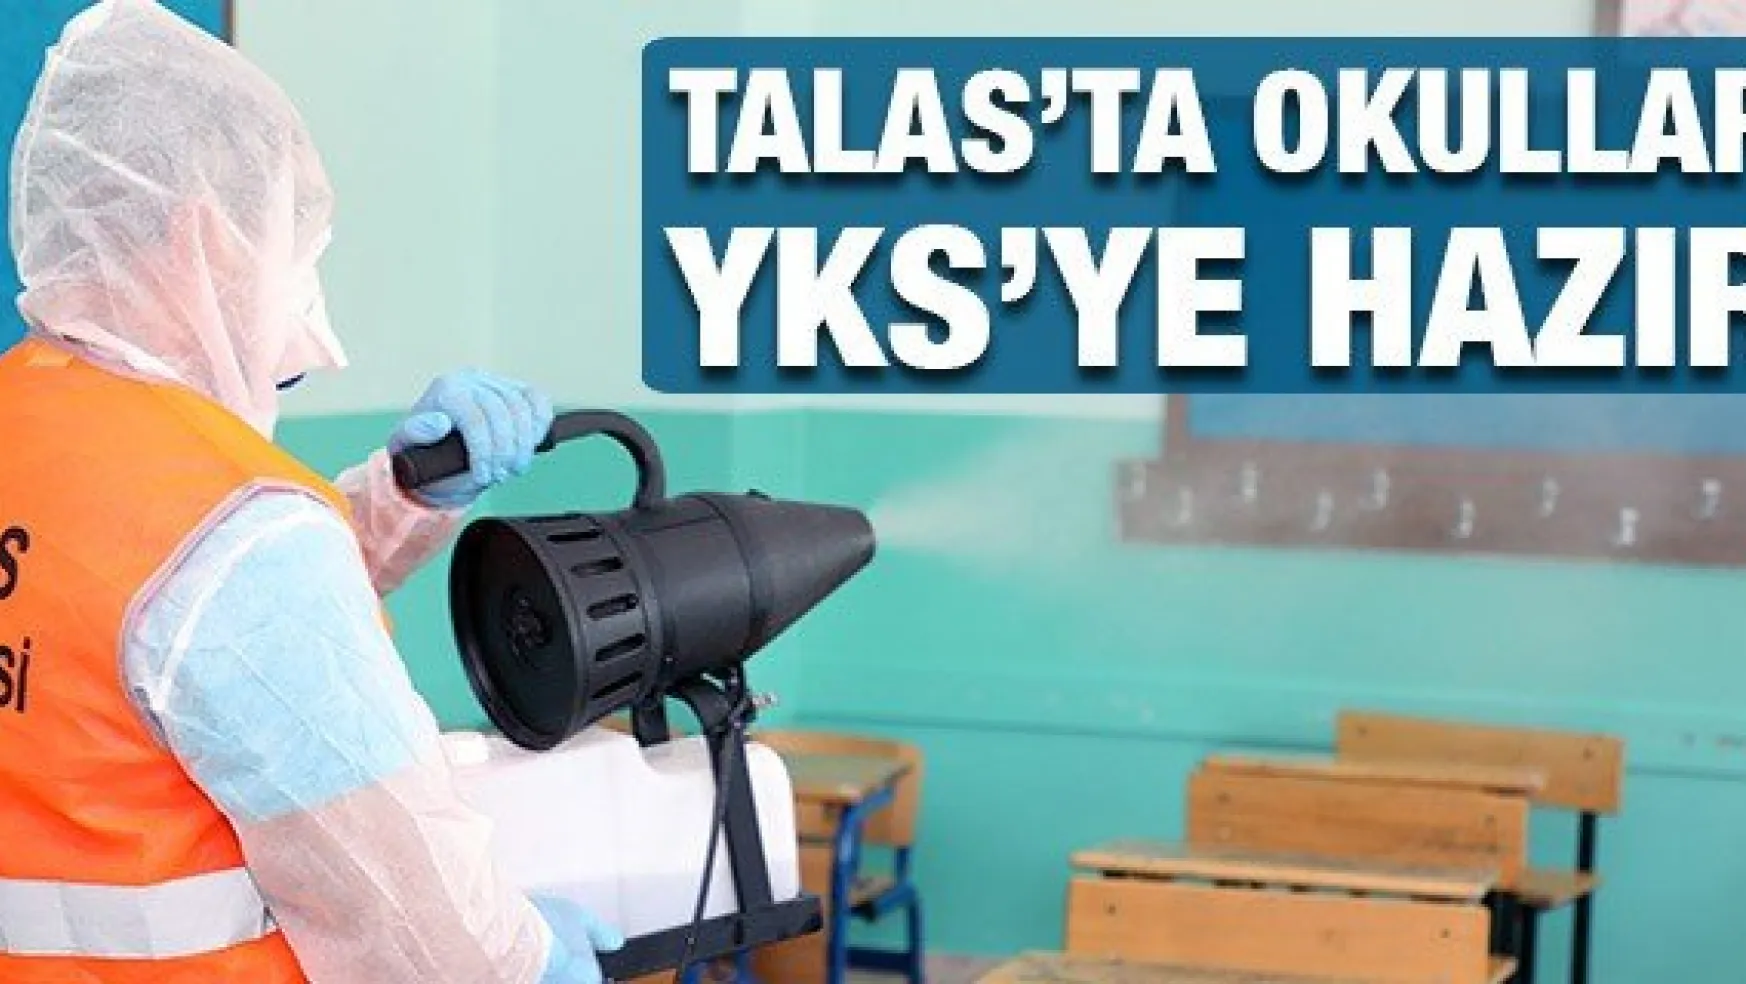 Talas'ta okullar YKS'ye hazır